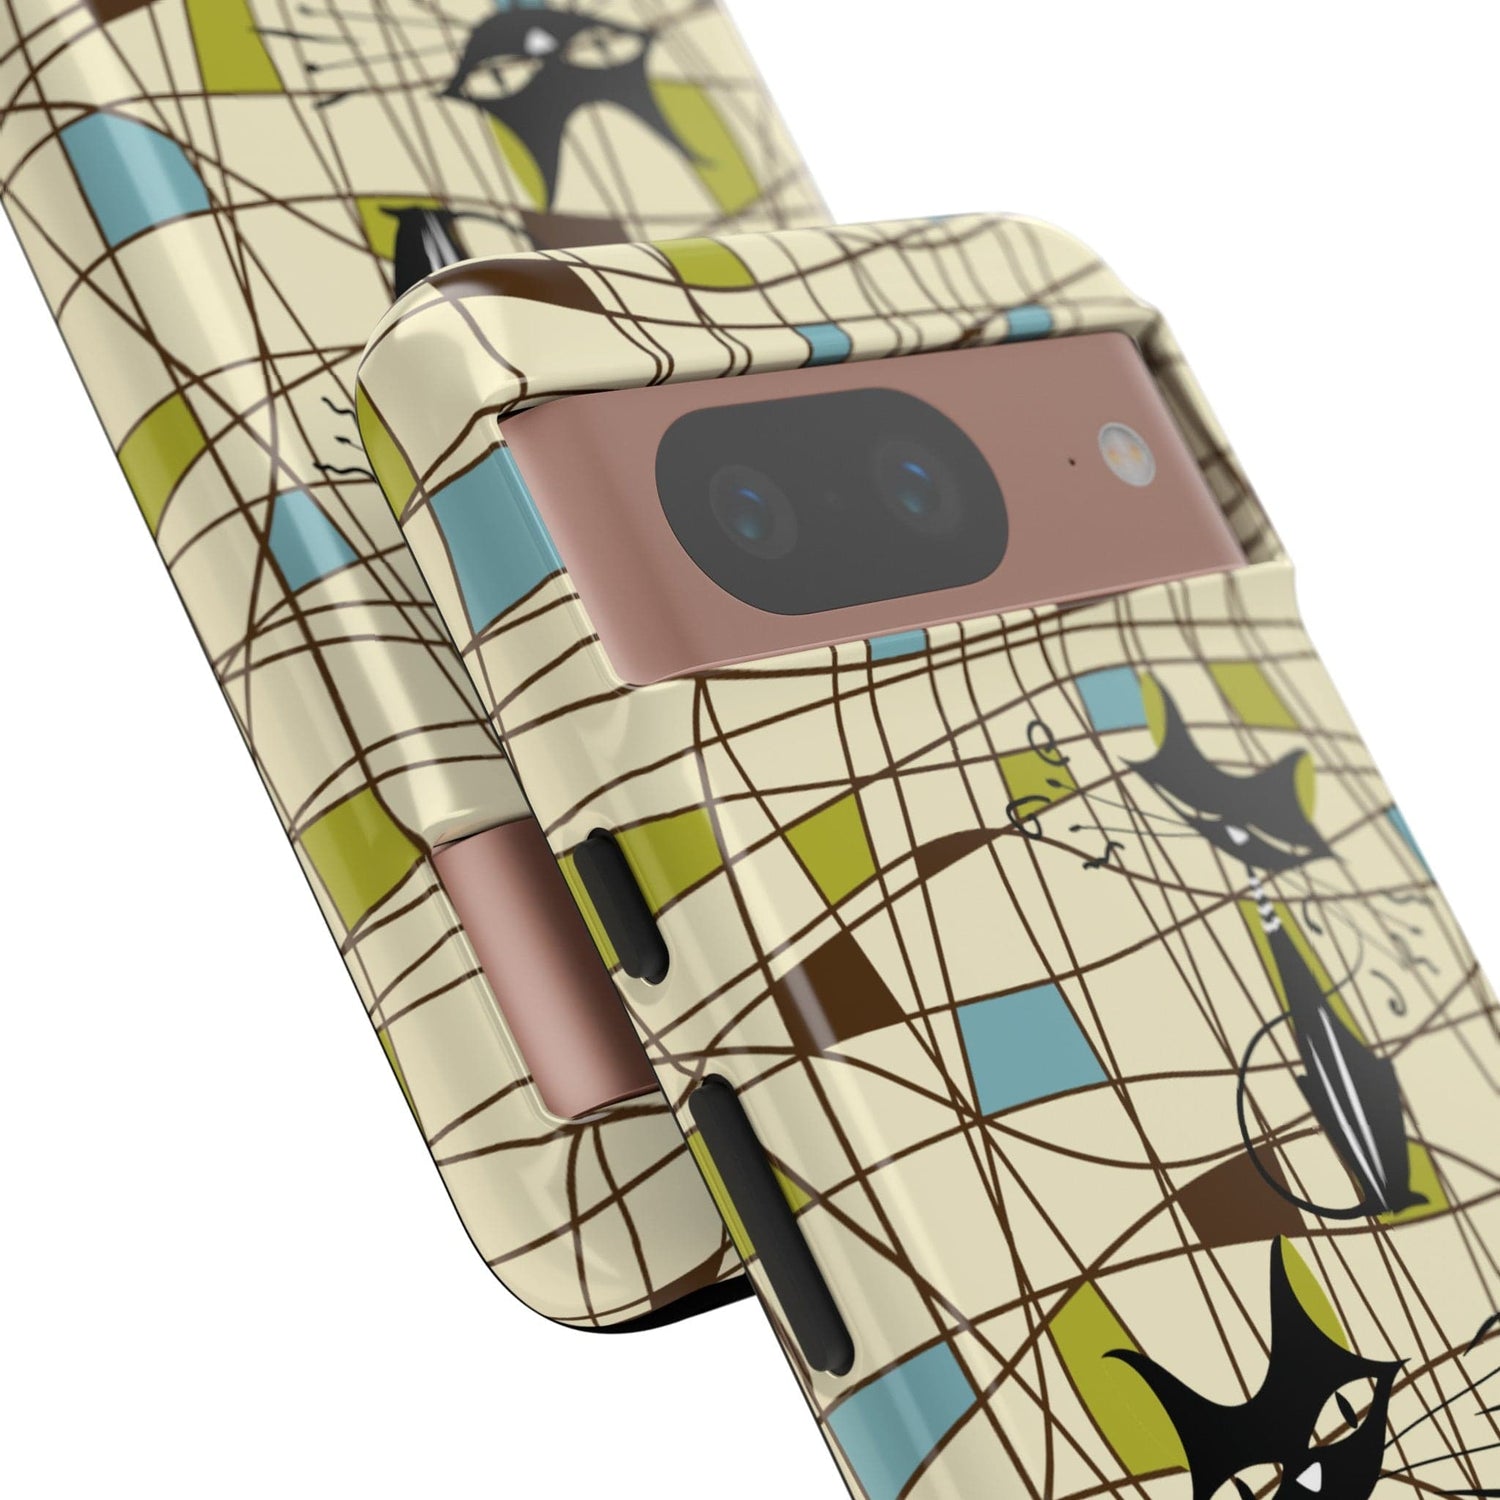 Kate McEnroe New York Atomic Cat Mid Century Modern Retro Chic Google Pixel Phone Cases Phone Cases